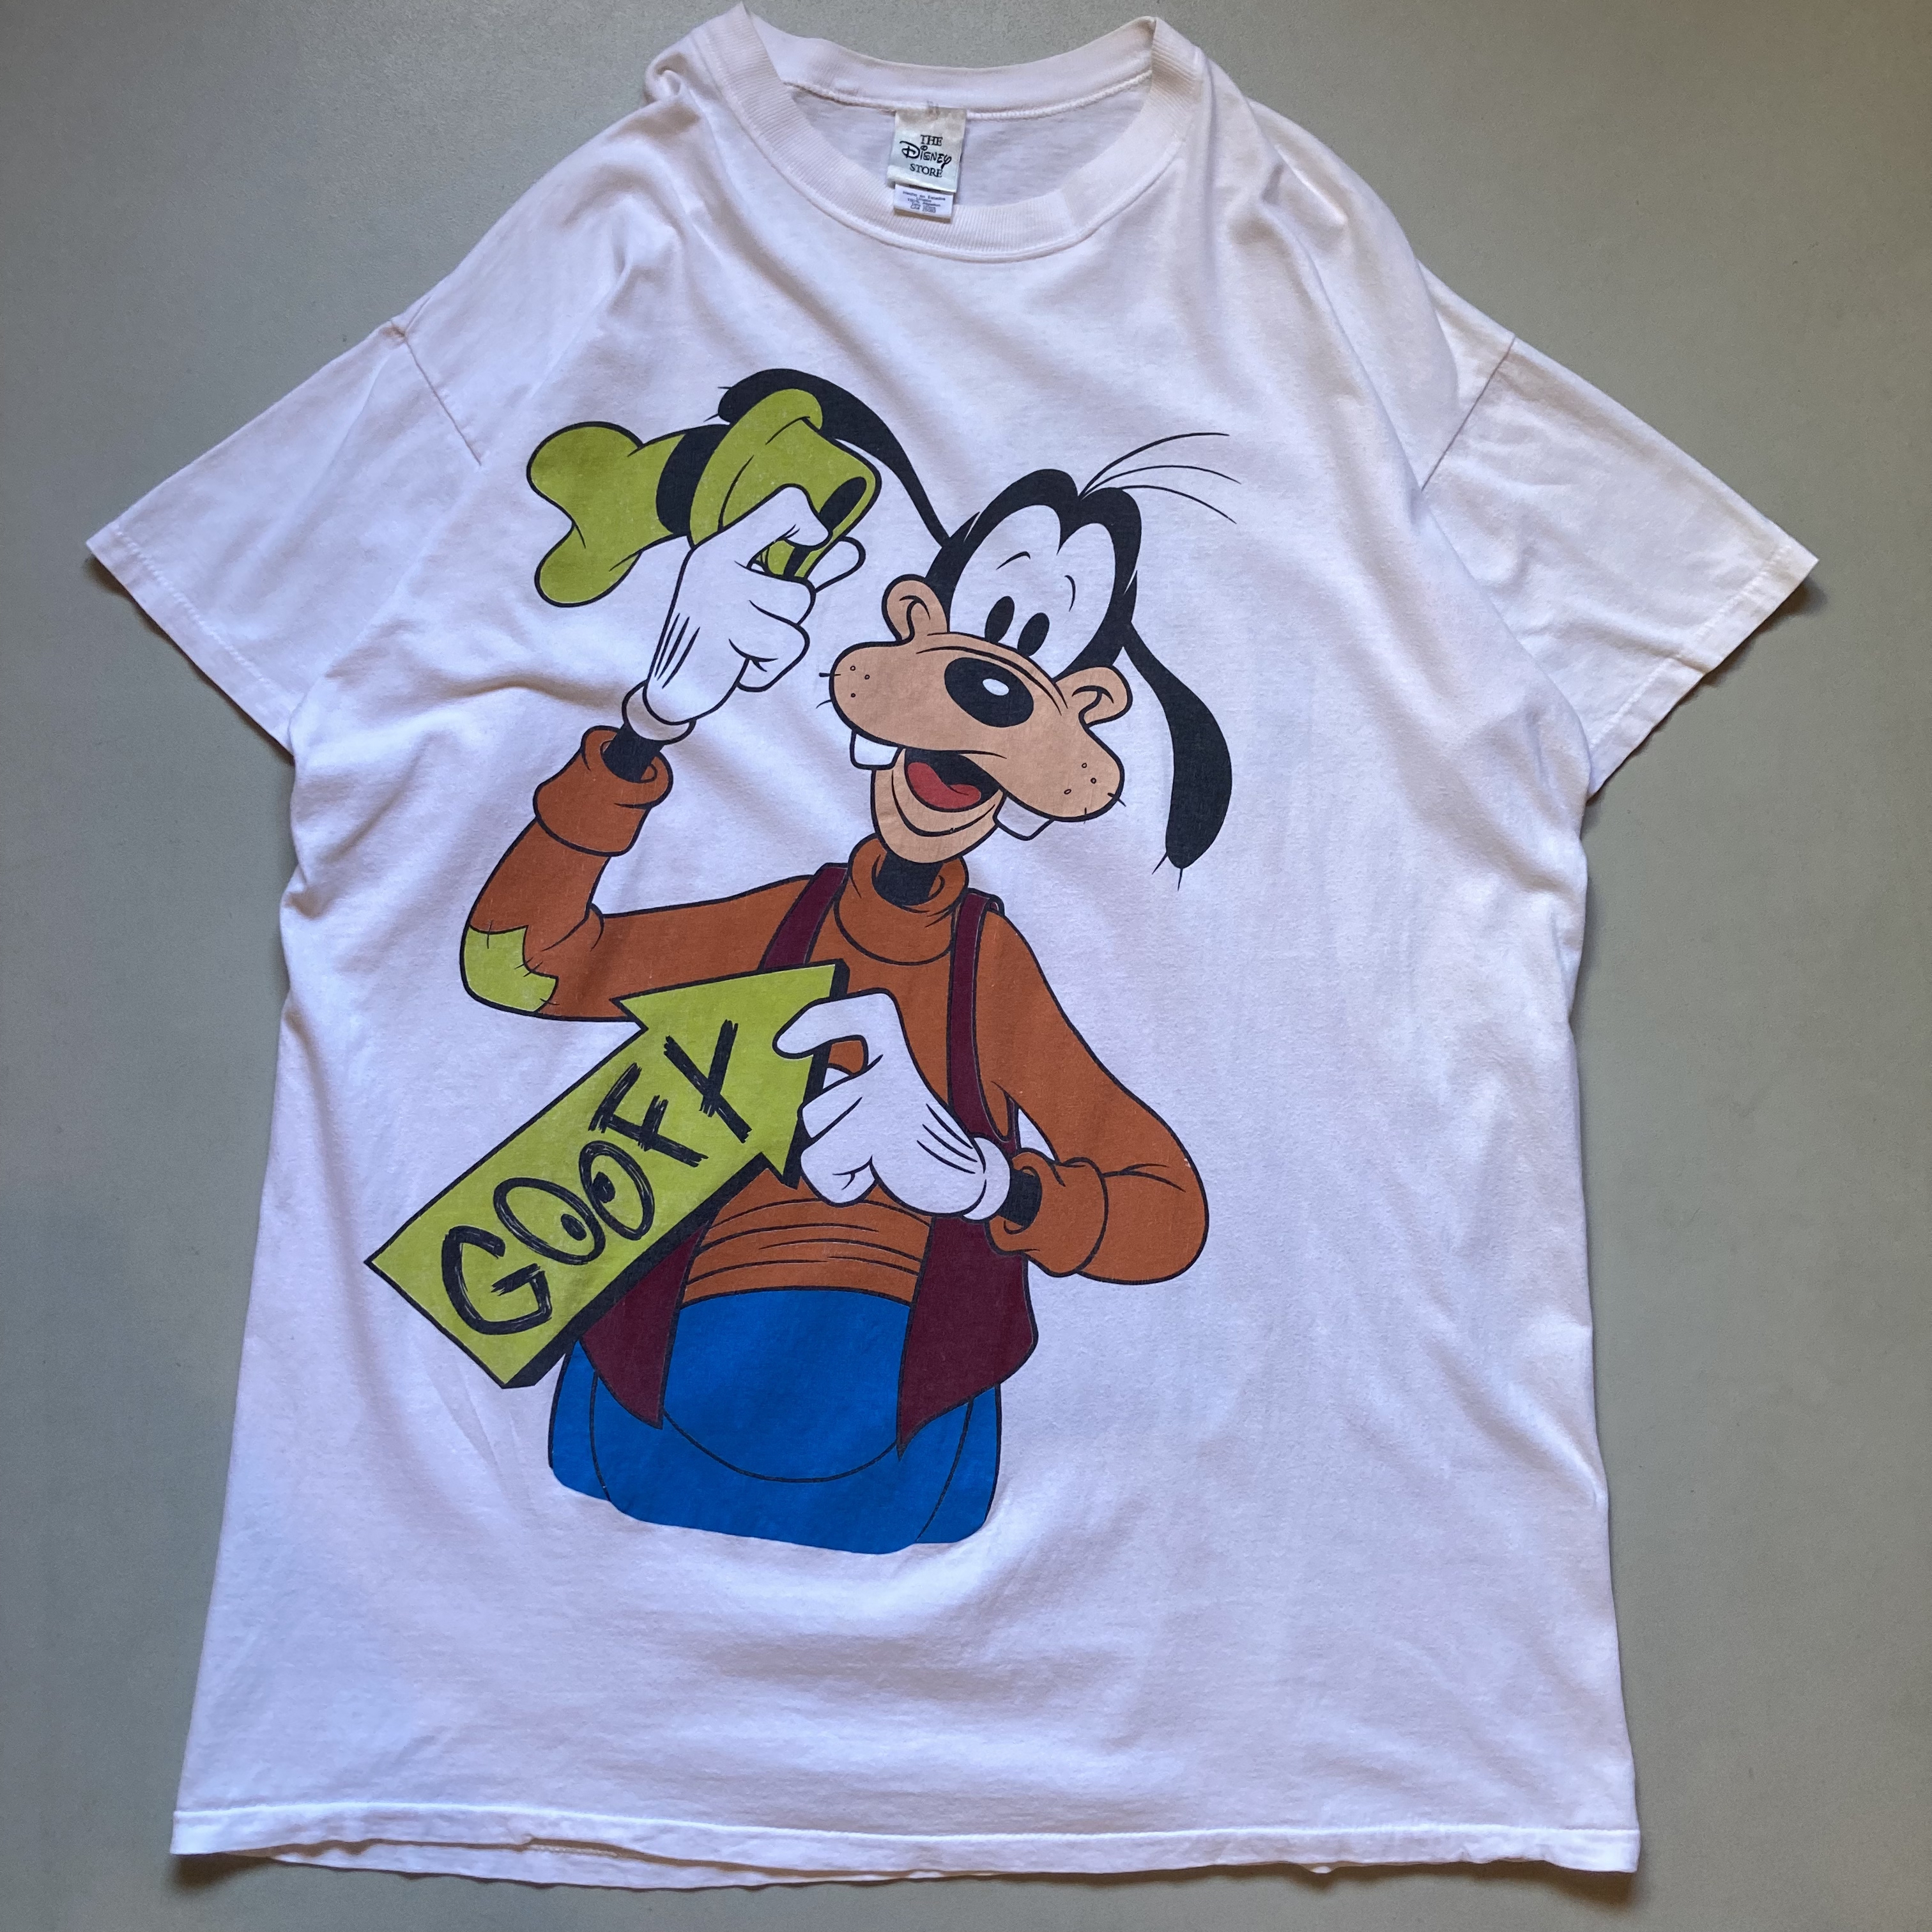 90s〜 Disney goofy T-shirt 90年代 2000年代 ディズニー グーフィーT ...